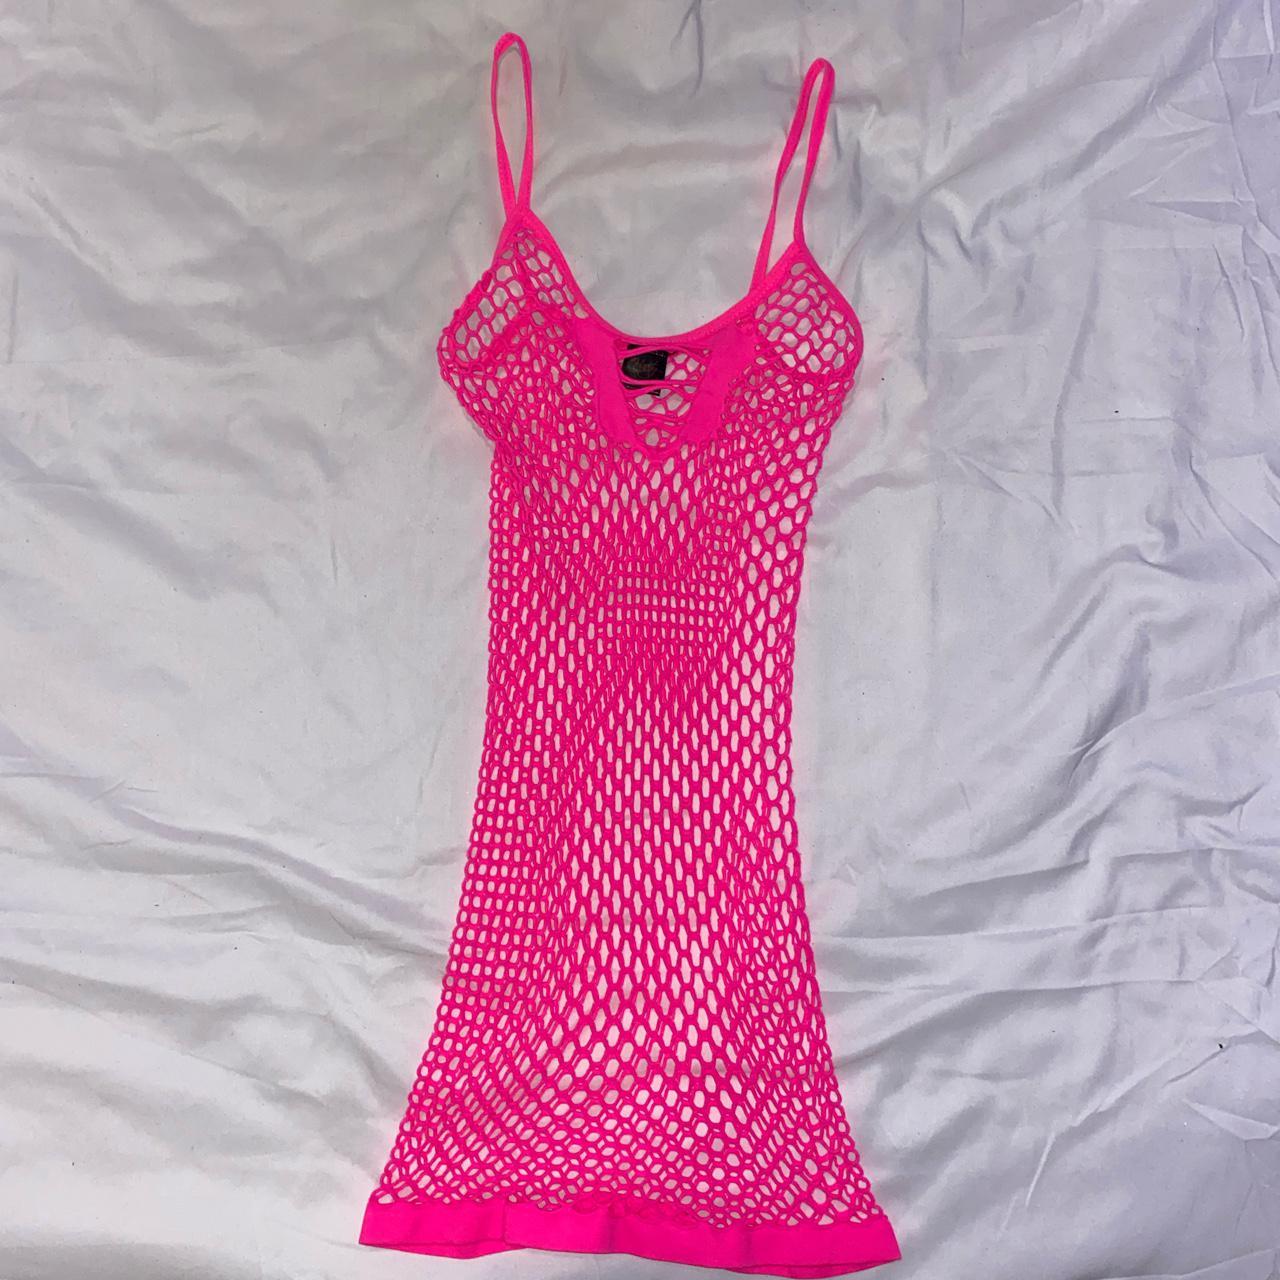 Product Image 1 - Dollskill hot pink fishnet dress,